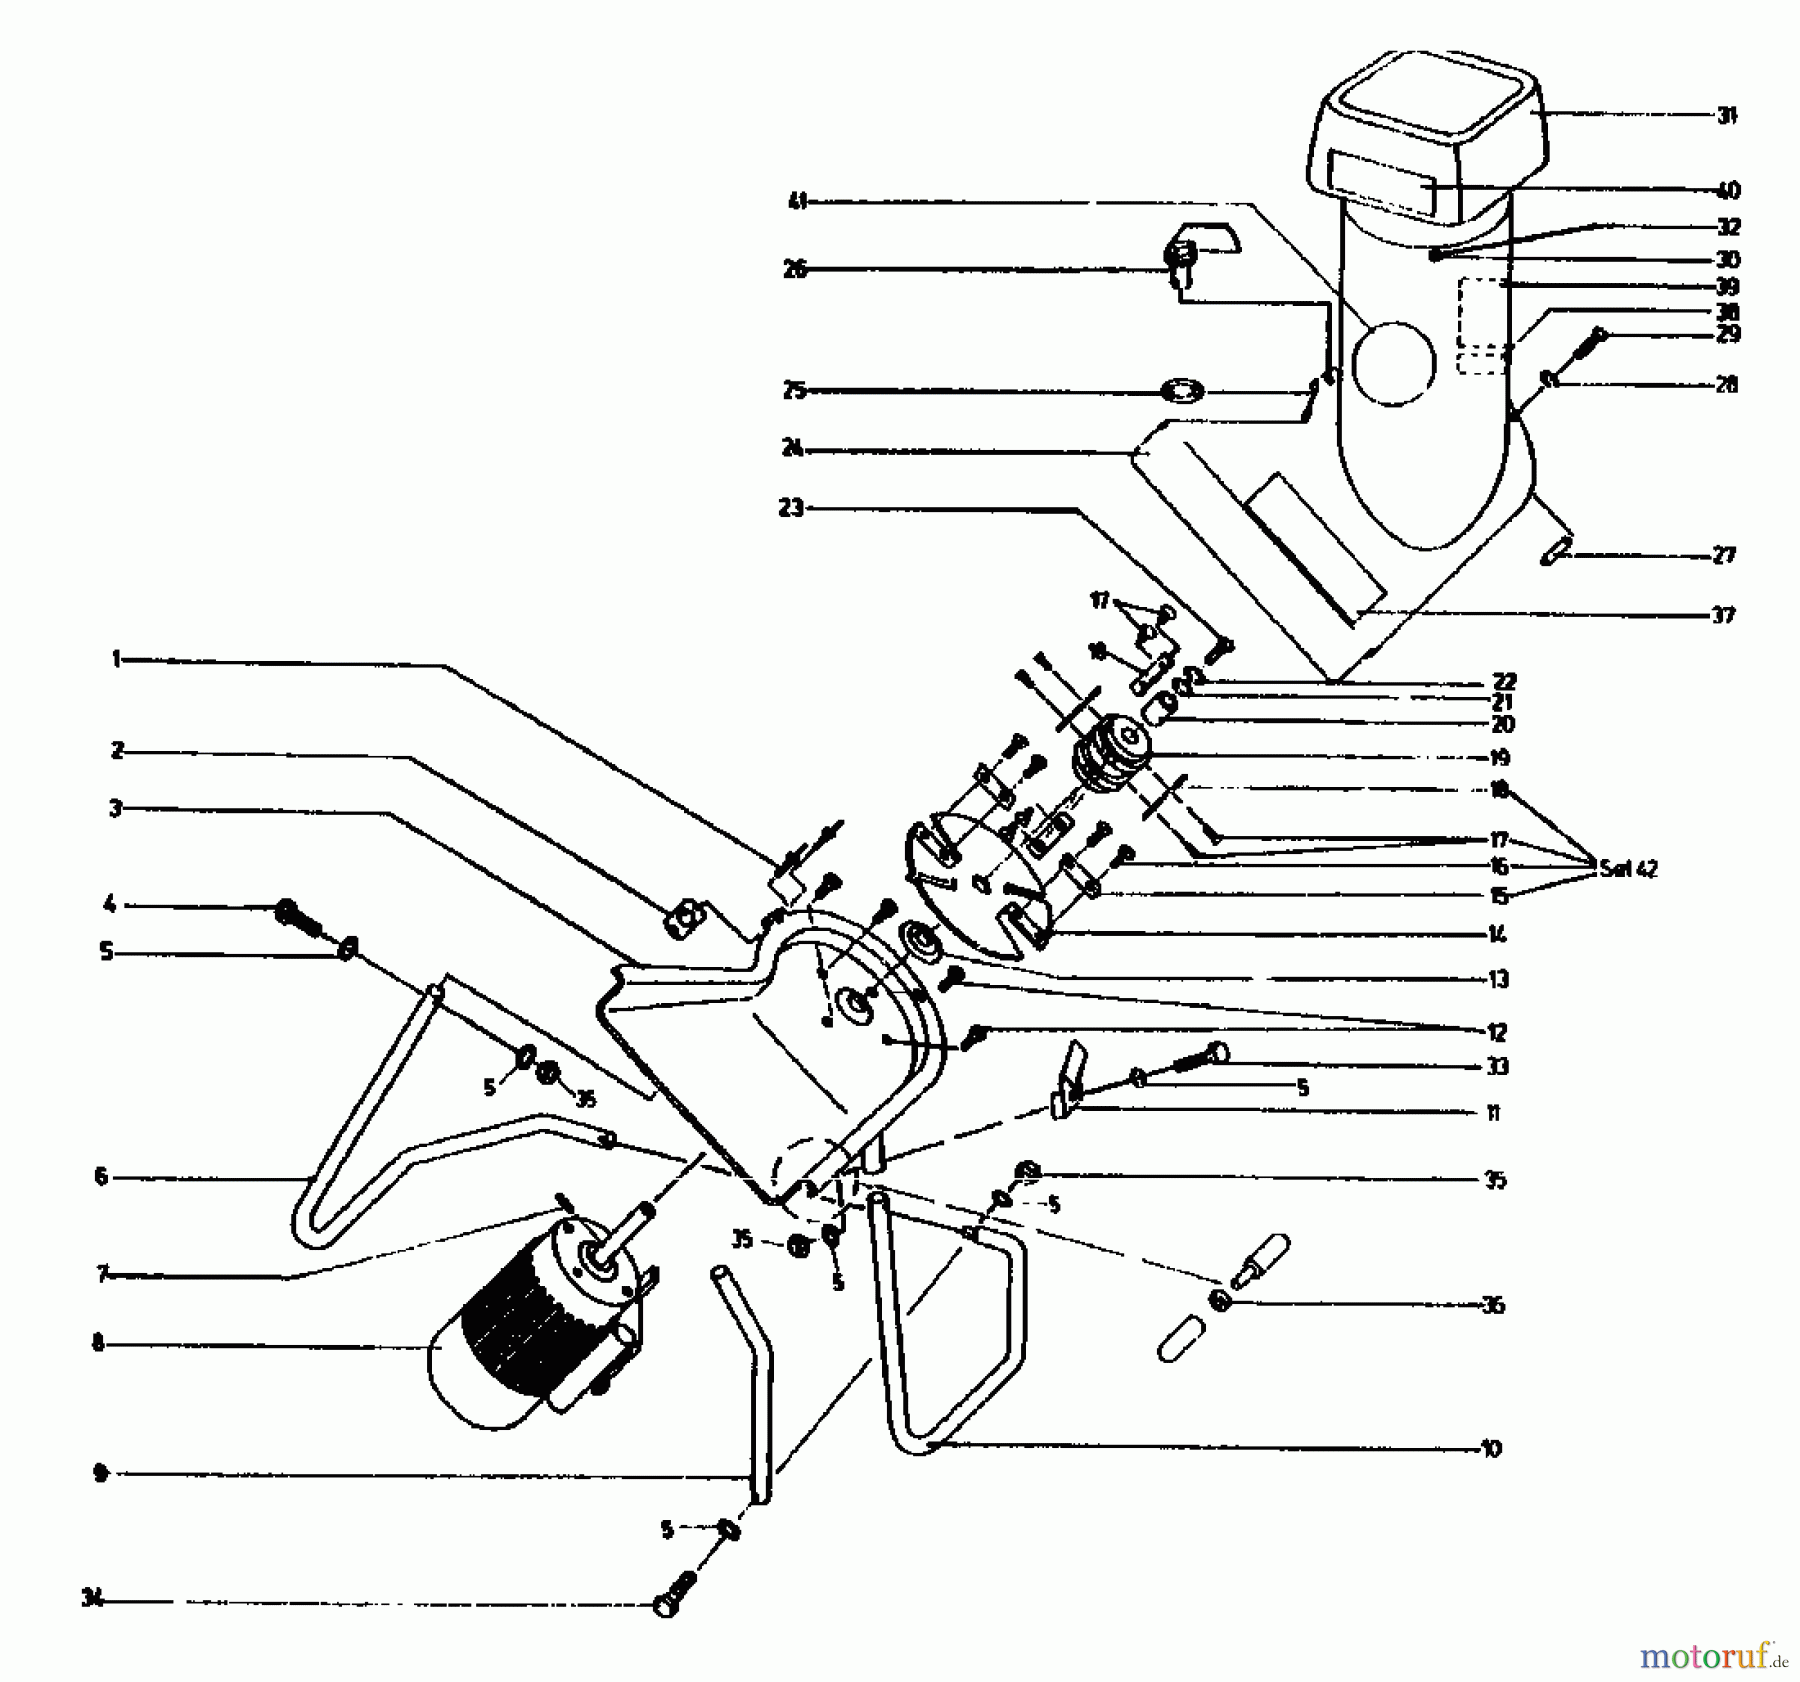  Gutbrod Broyeur GAE 18 04002.04  (1990) Machine de base